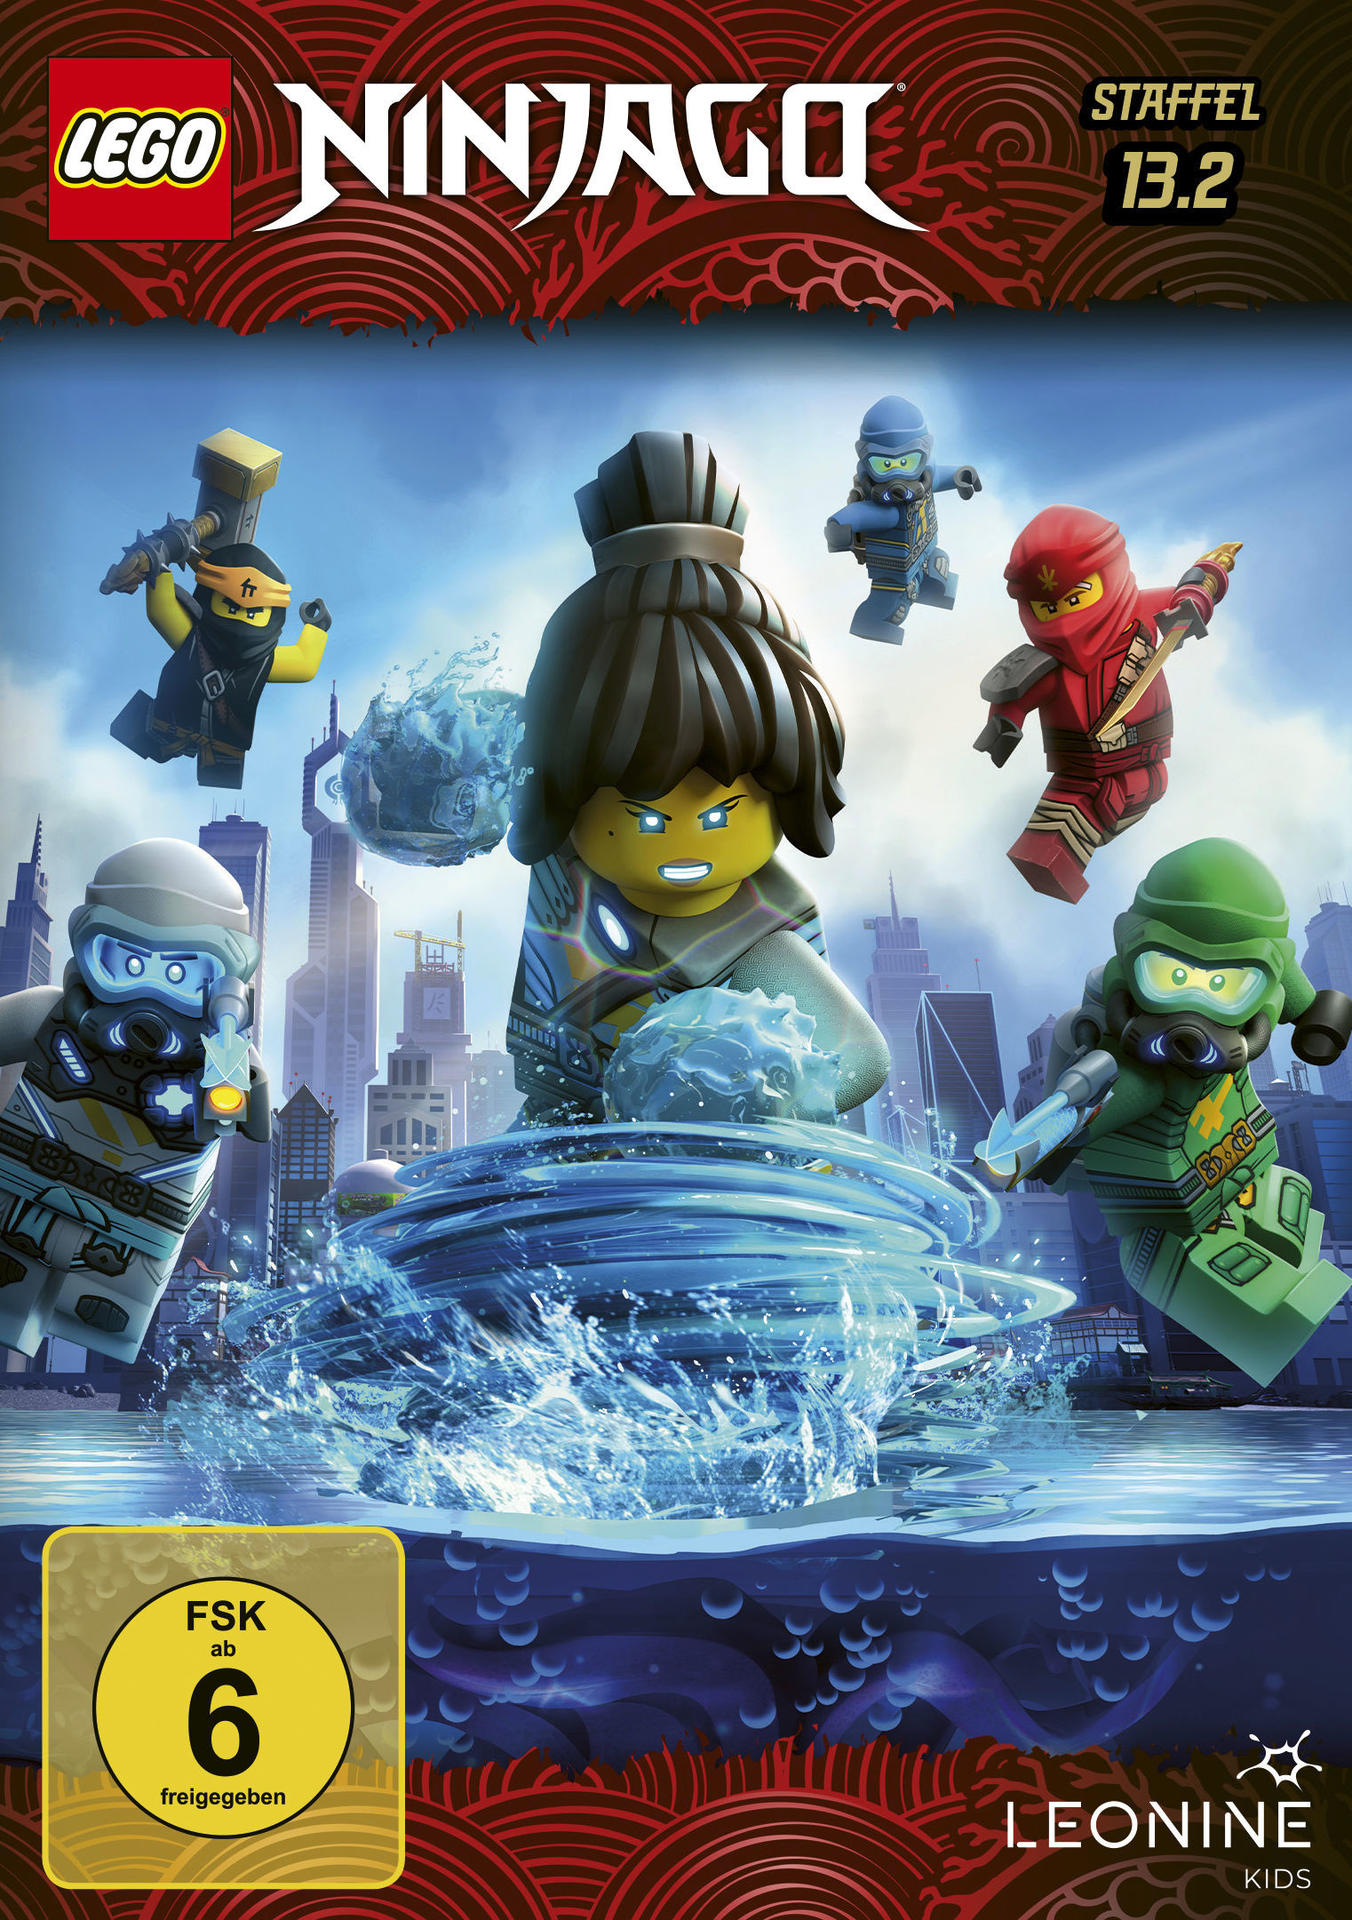 Staffel LEGO 13.2 Ninjago DVD